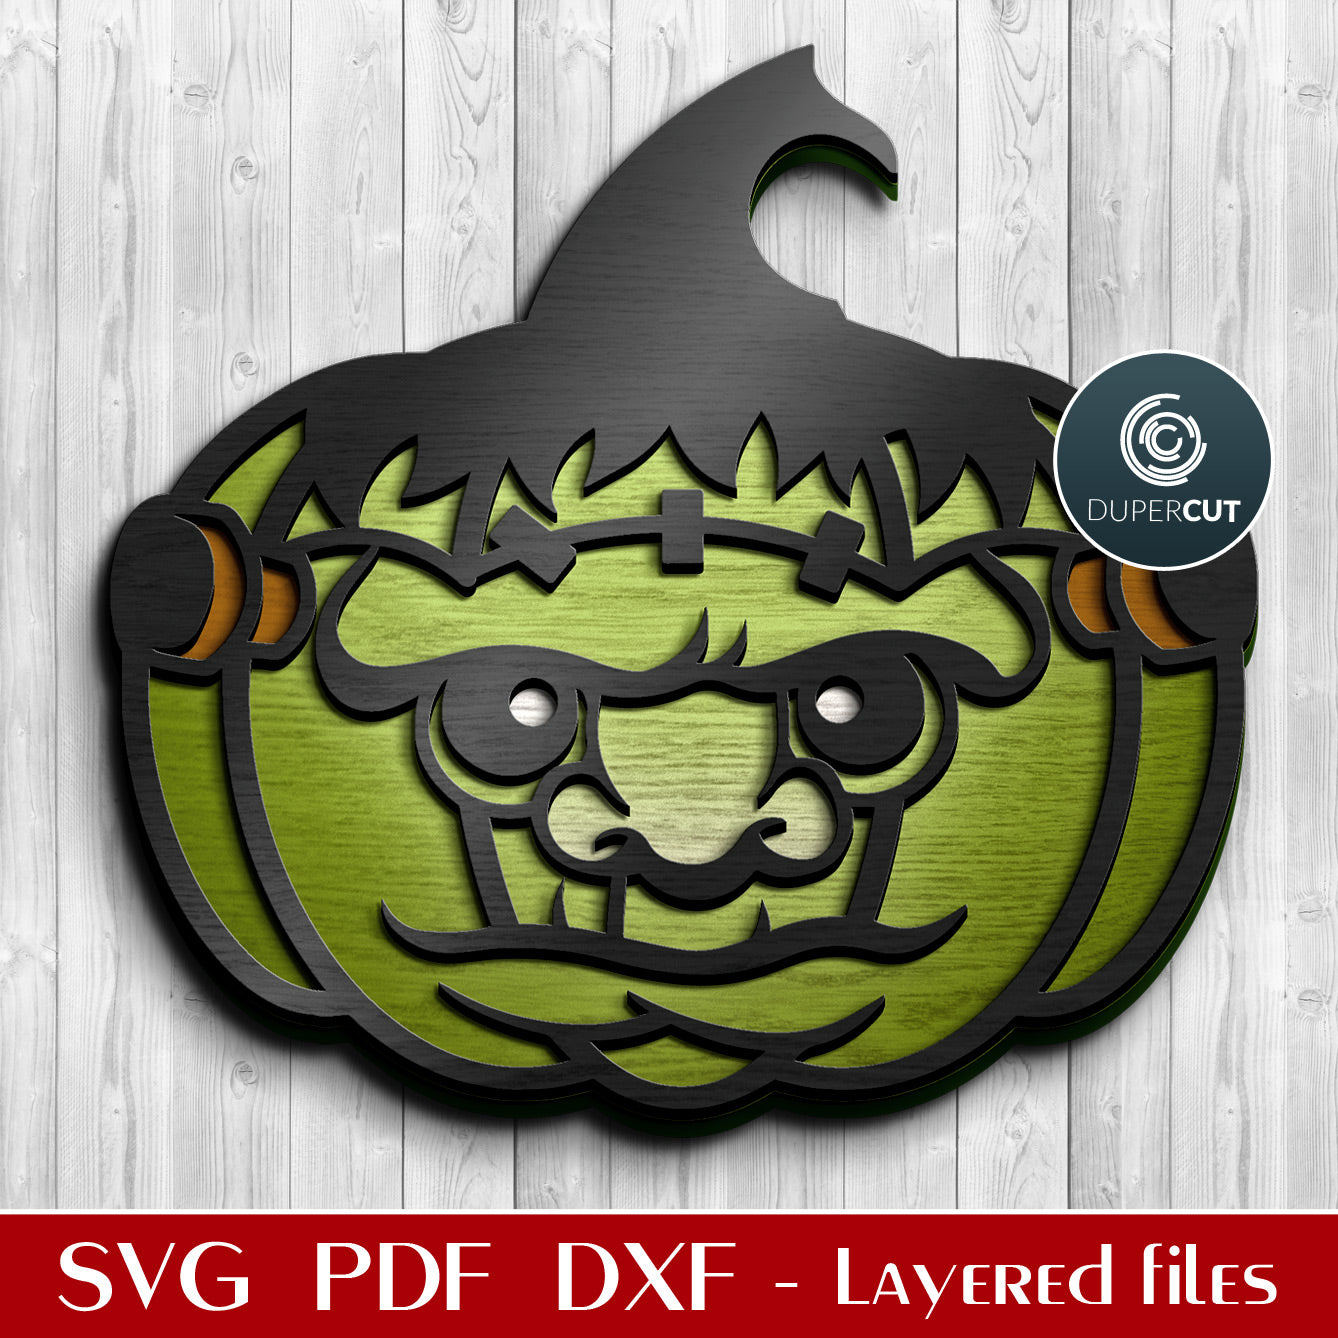 Frankenstein monster pumpkin Halloween decoration - SVG PNG DXF vector laser cutting files for Cricut, Glowforge, Silhouette, CNC plasma machines by DuperCut